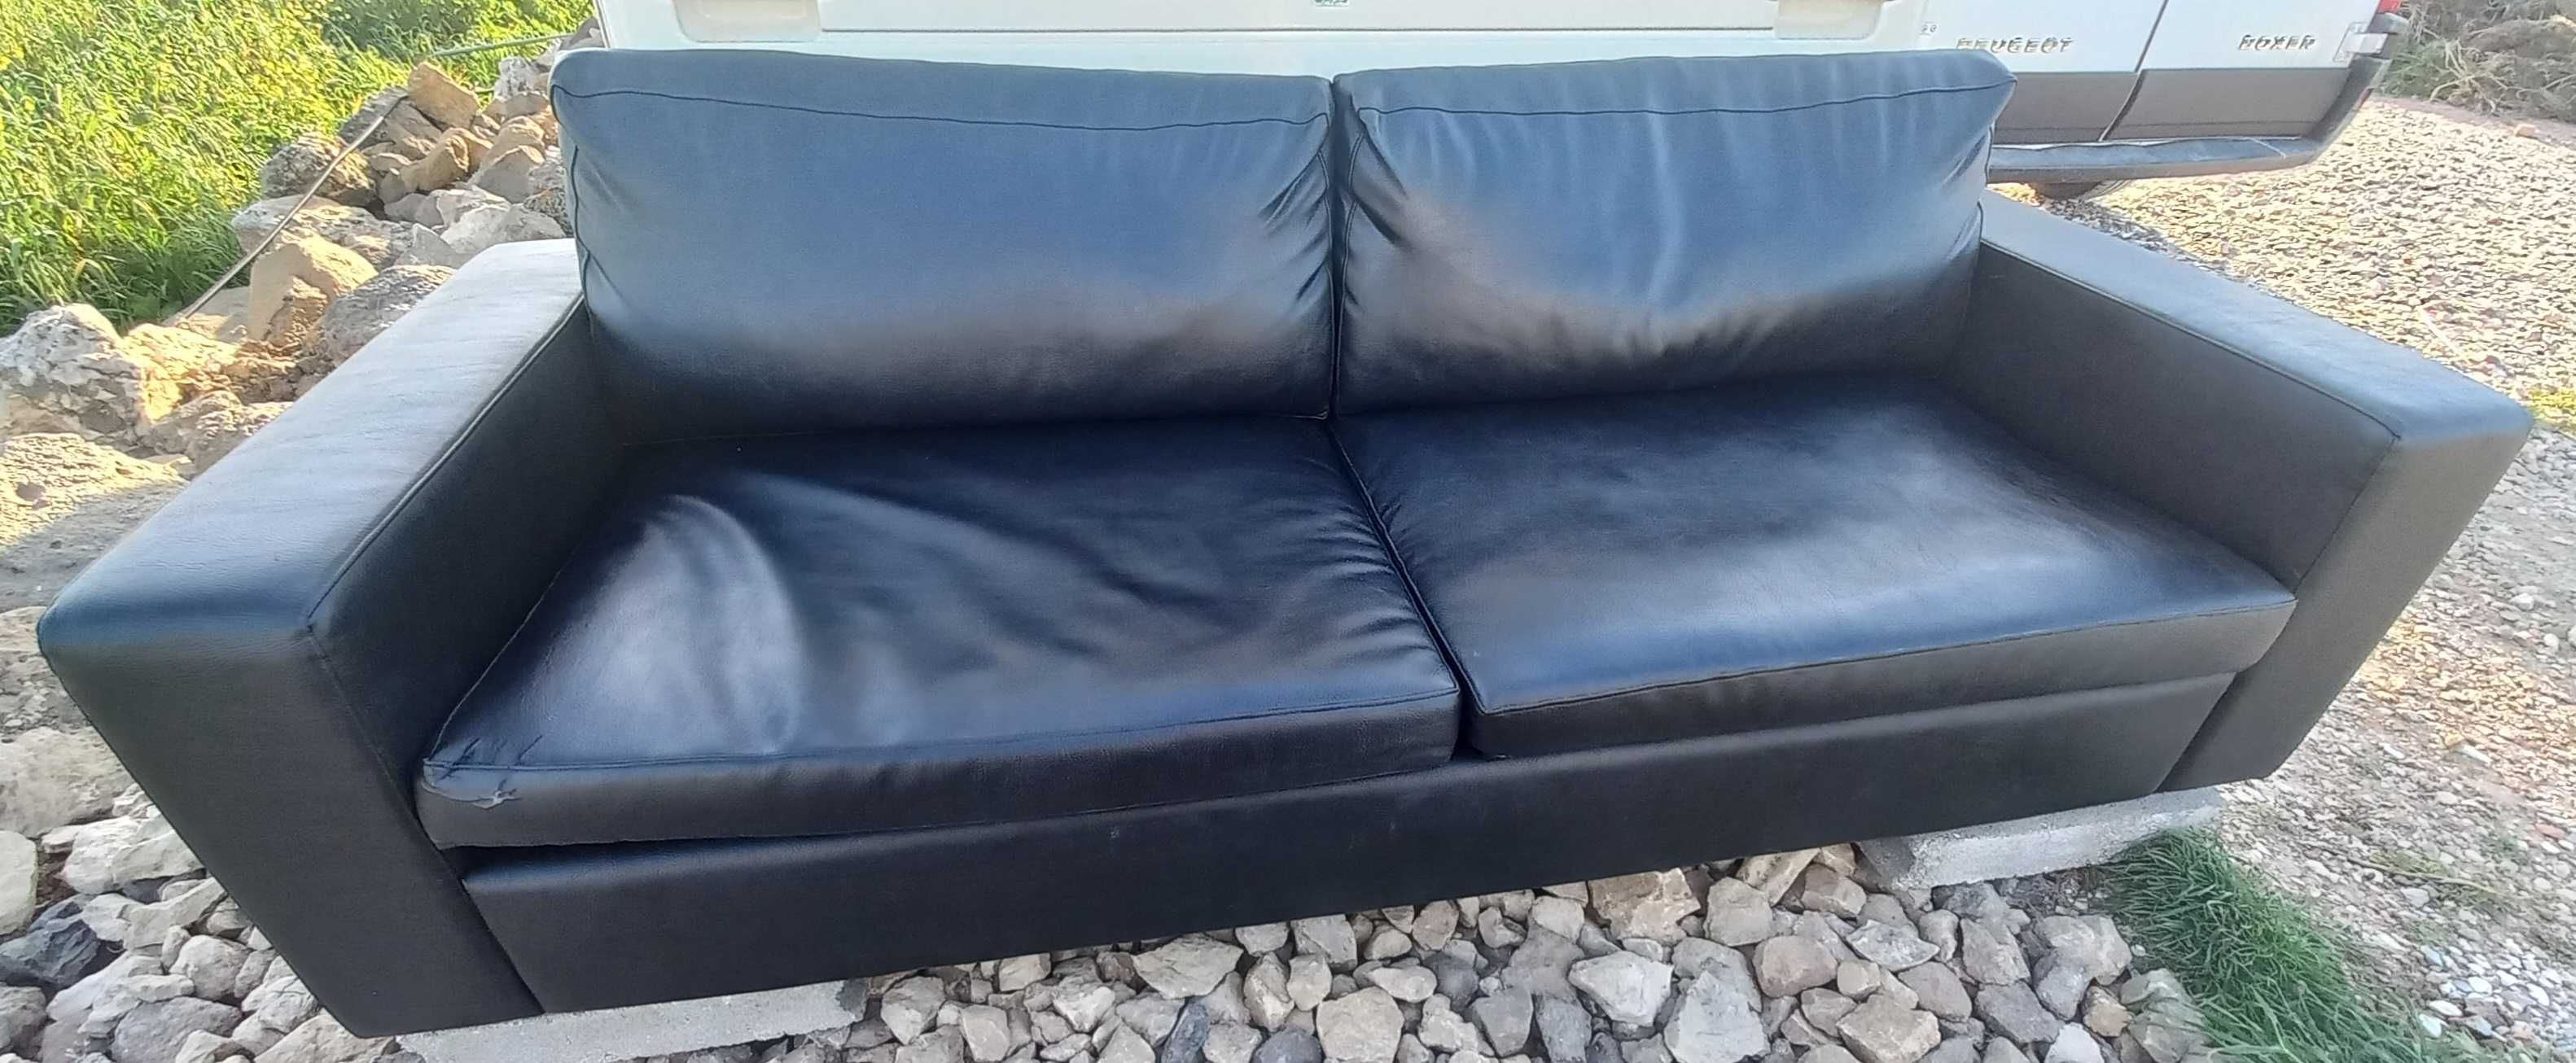 Maravilhoso sofá preto de 2,5m